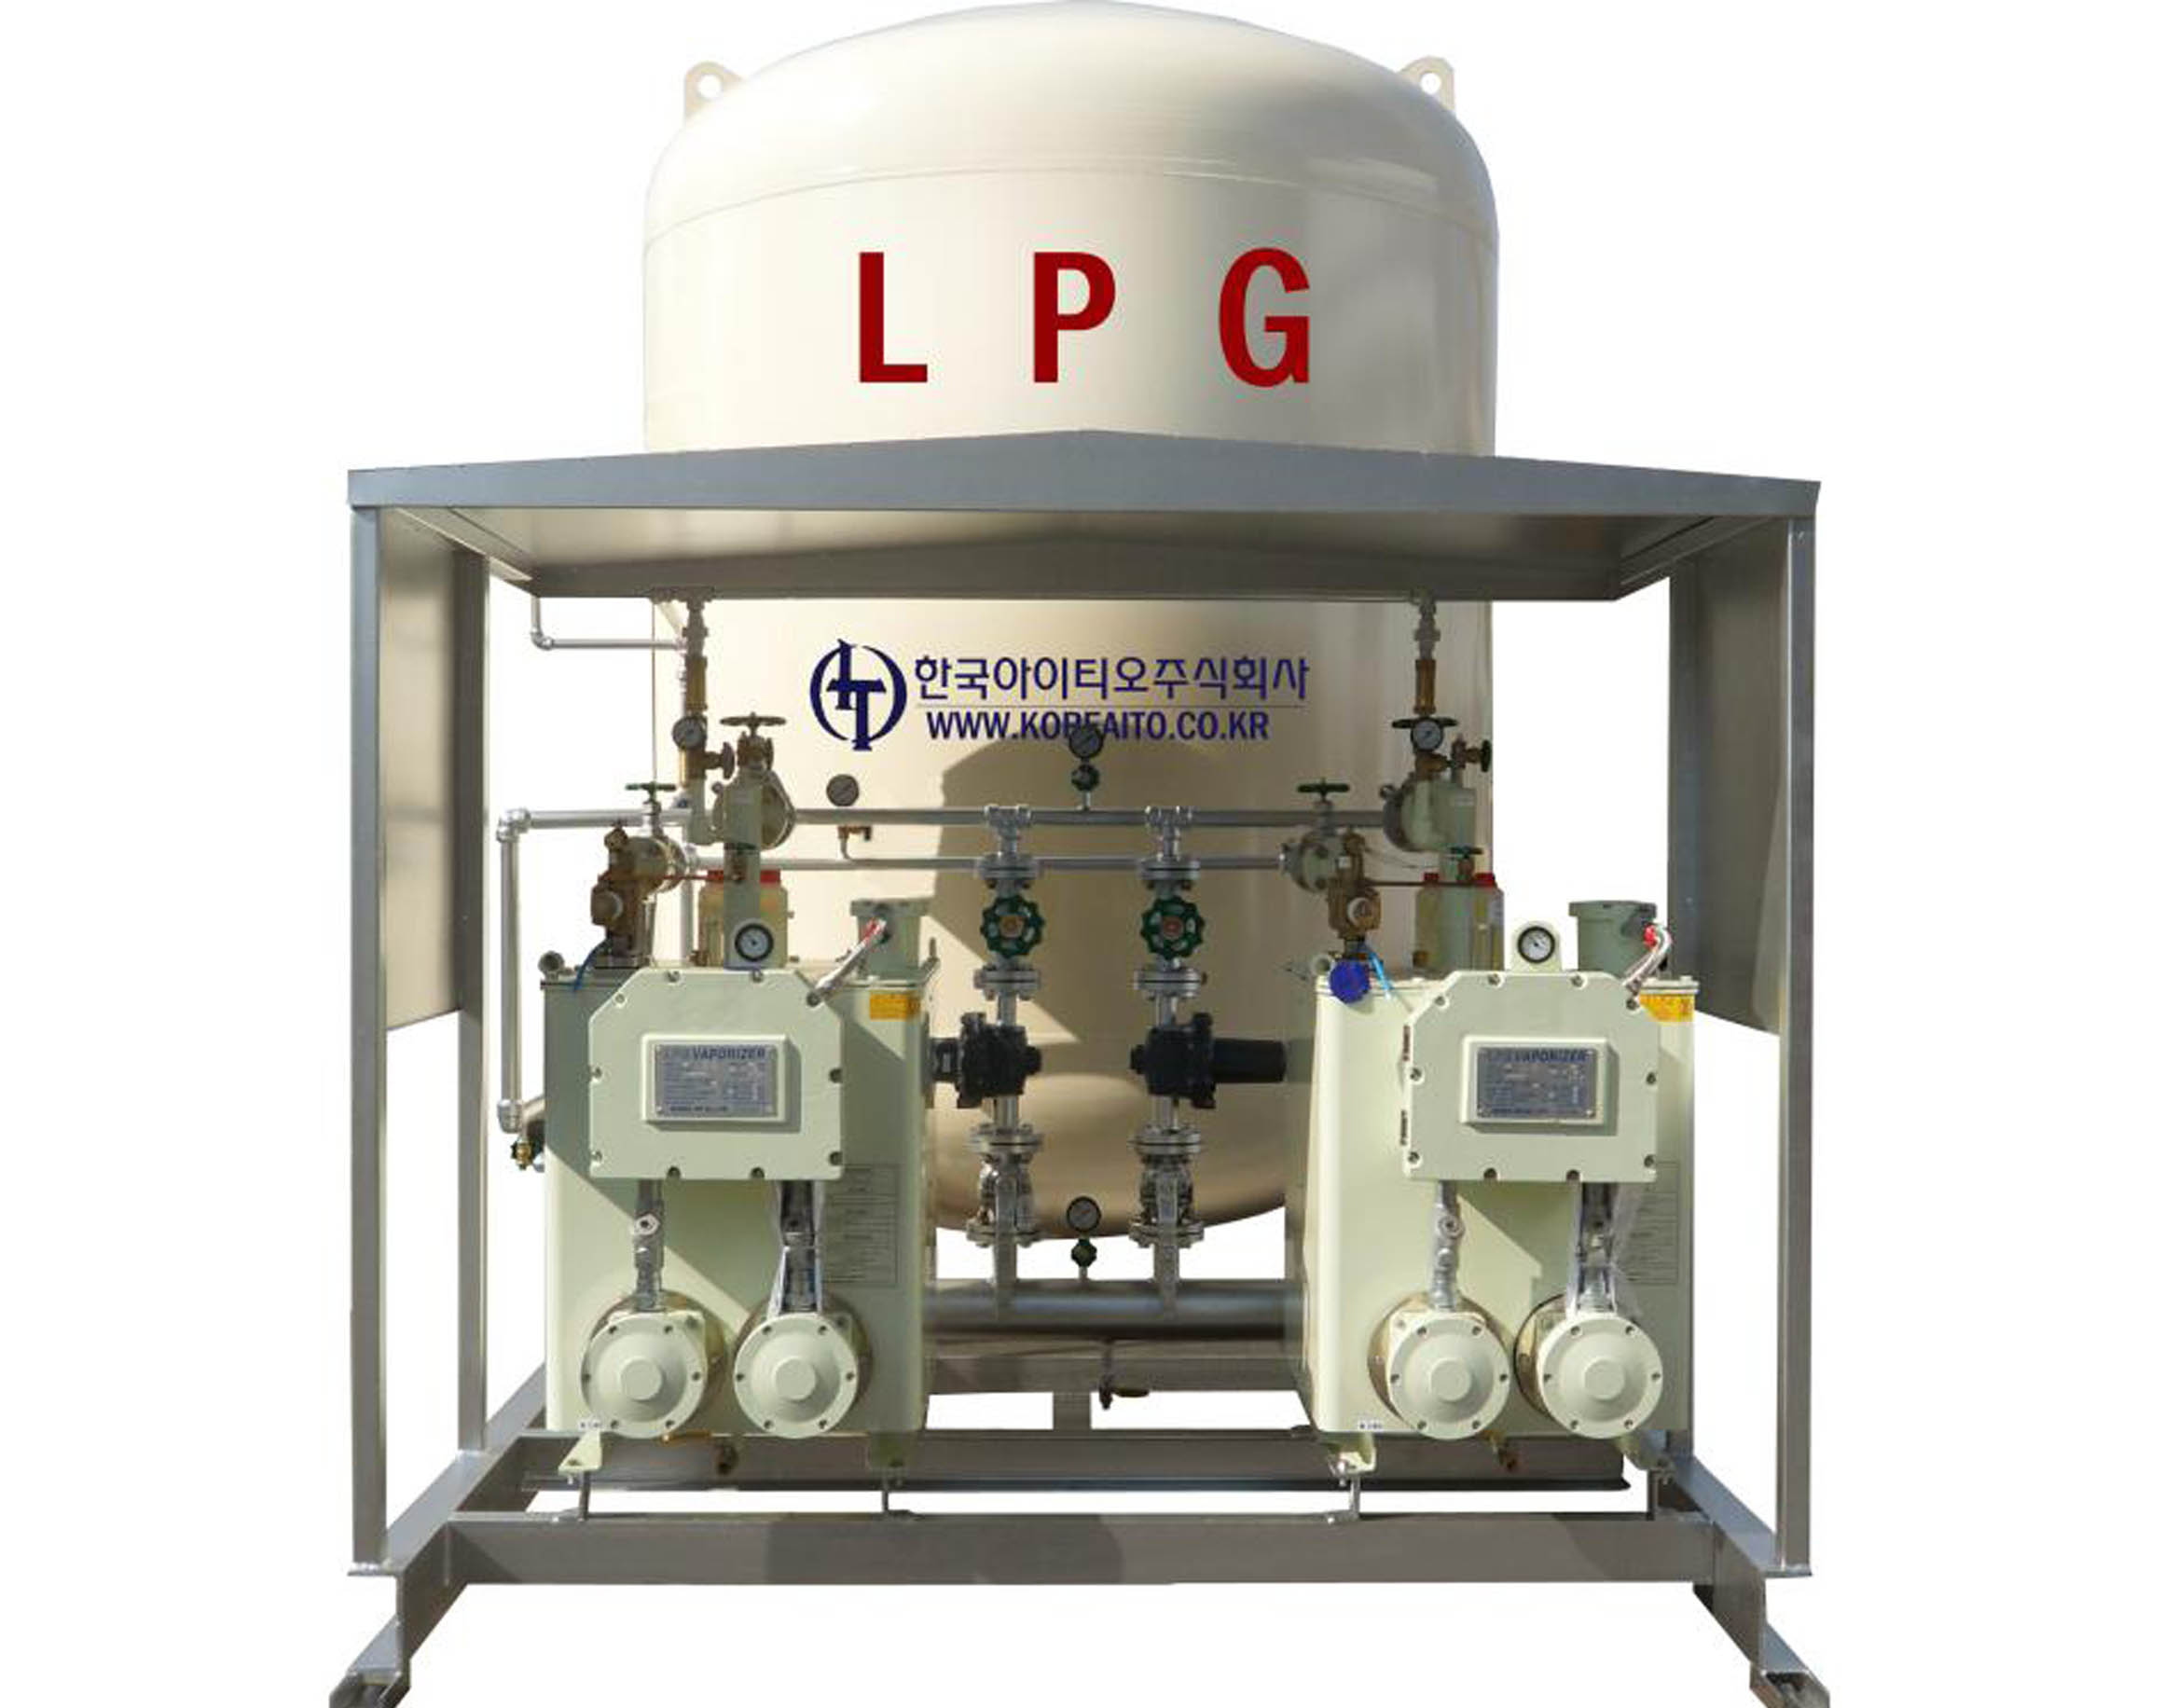 LPG gas supply system